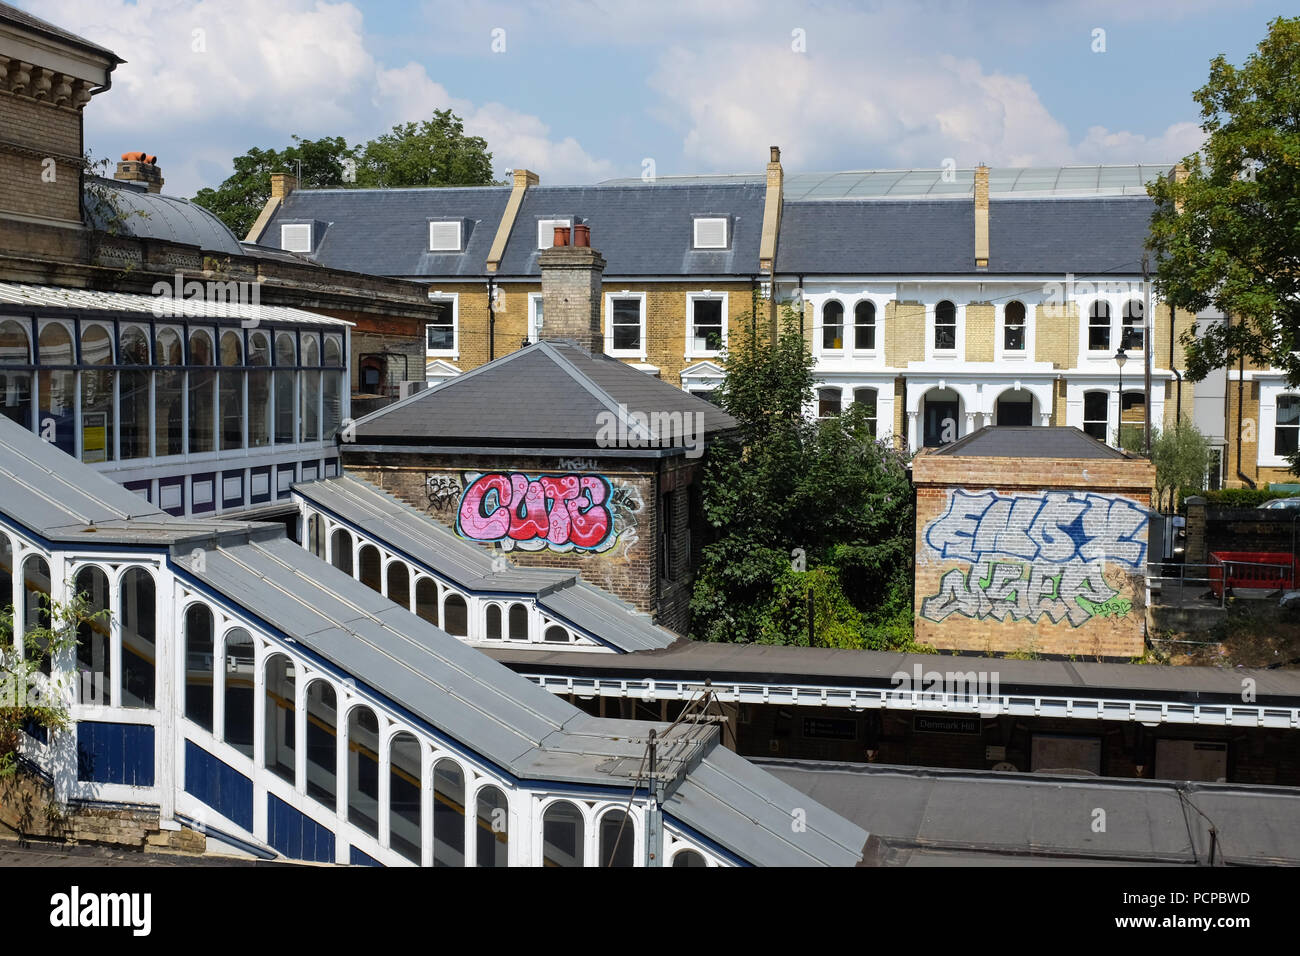 Graffiti at Denmark Hill train station in south London, England. Stock Photo